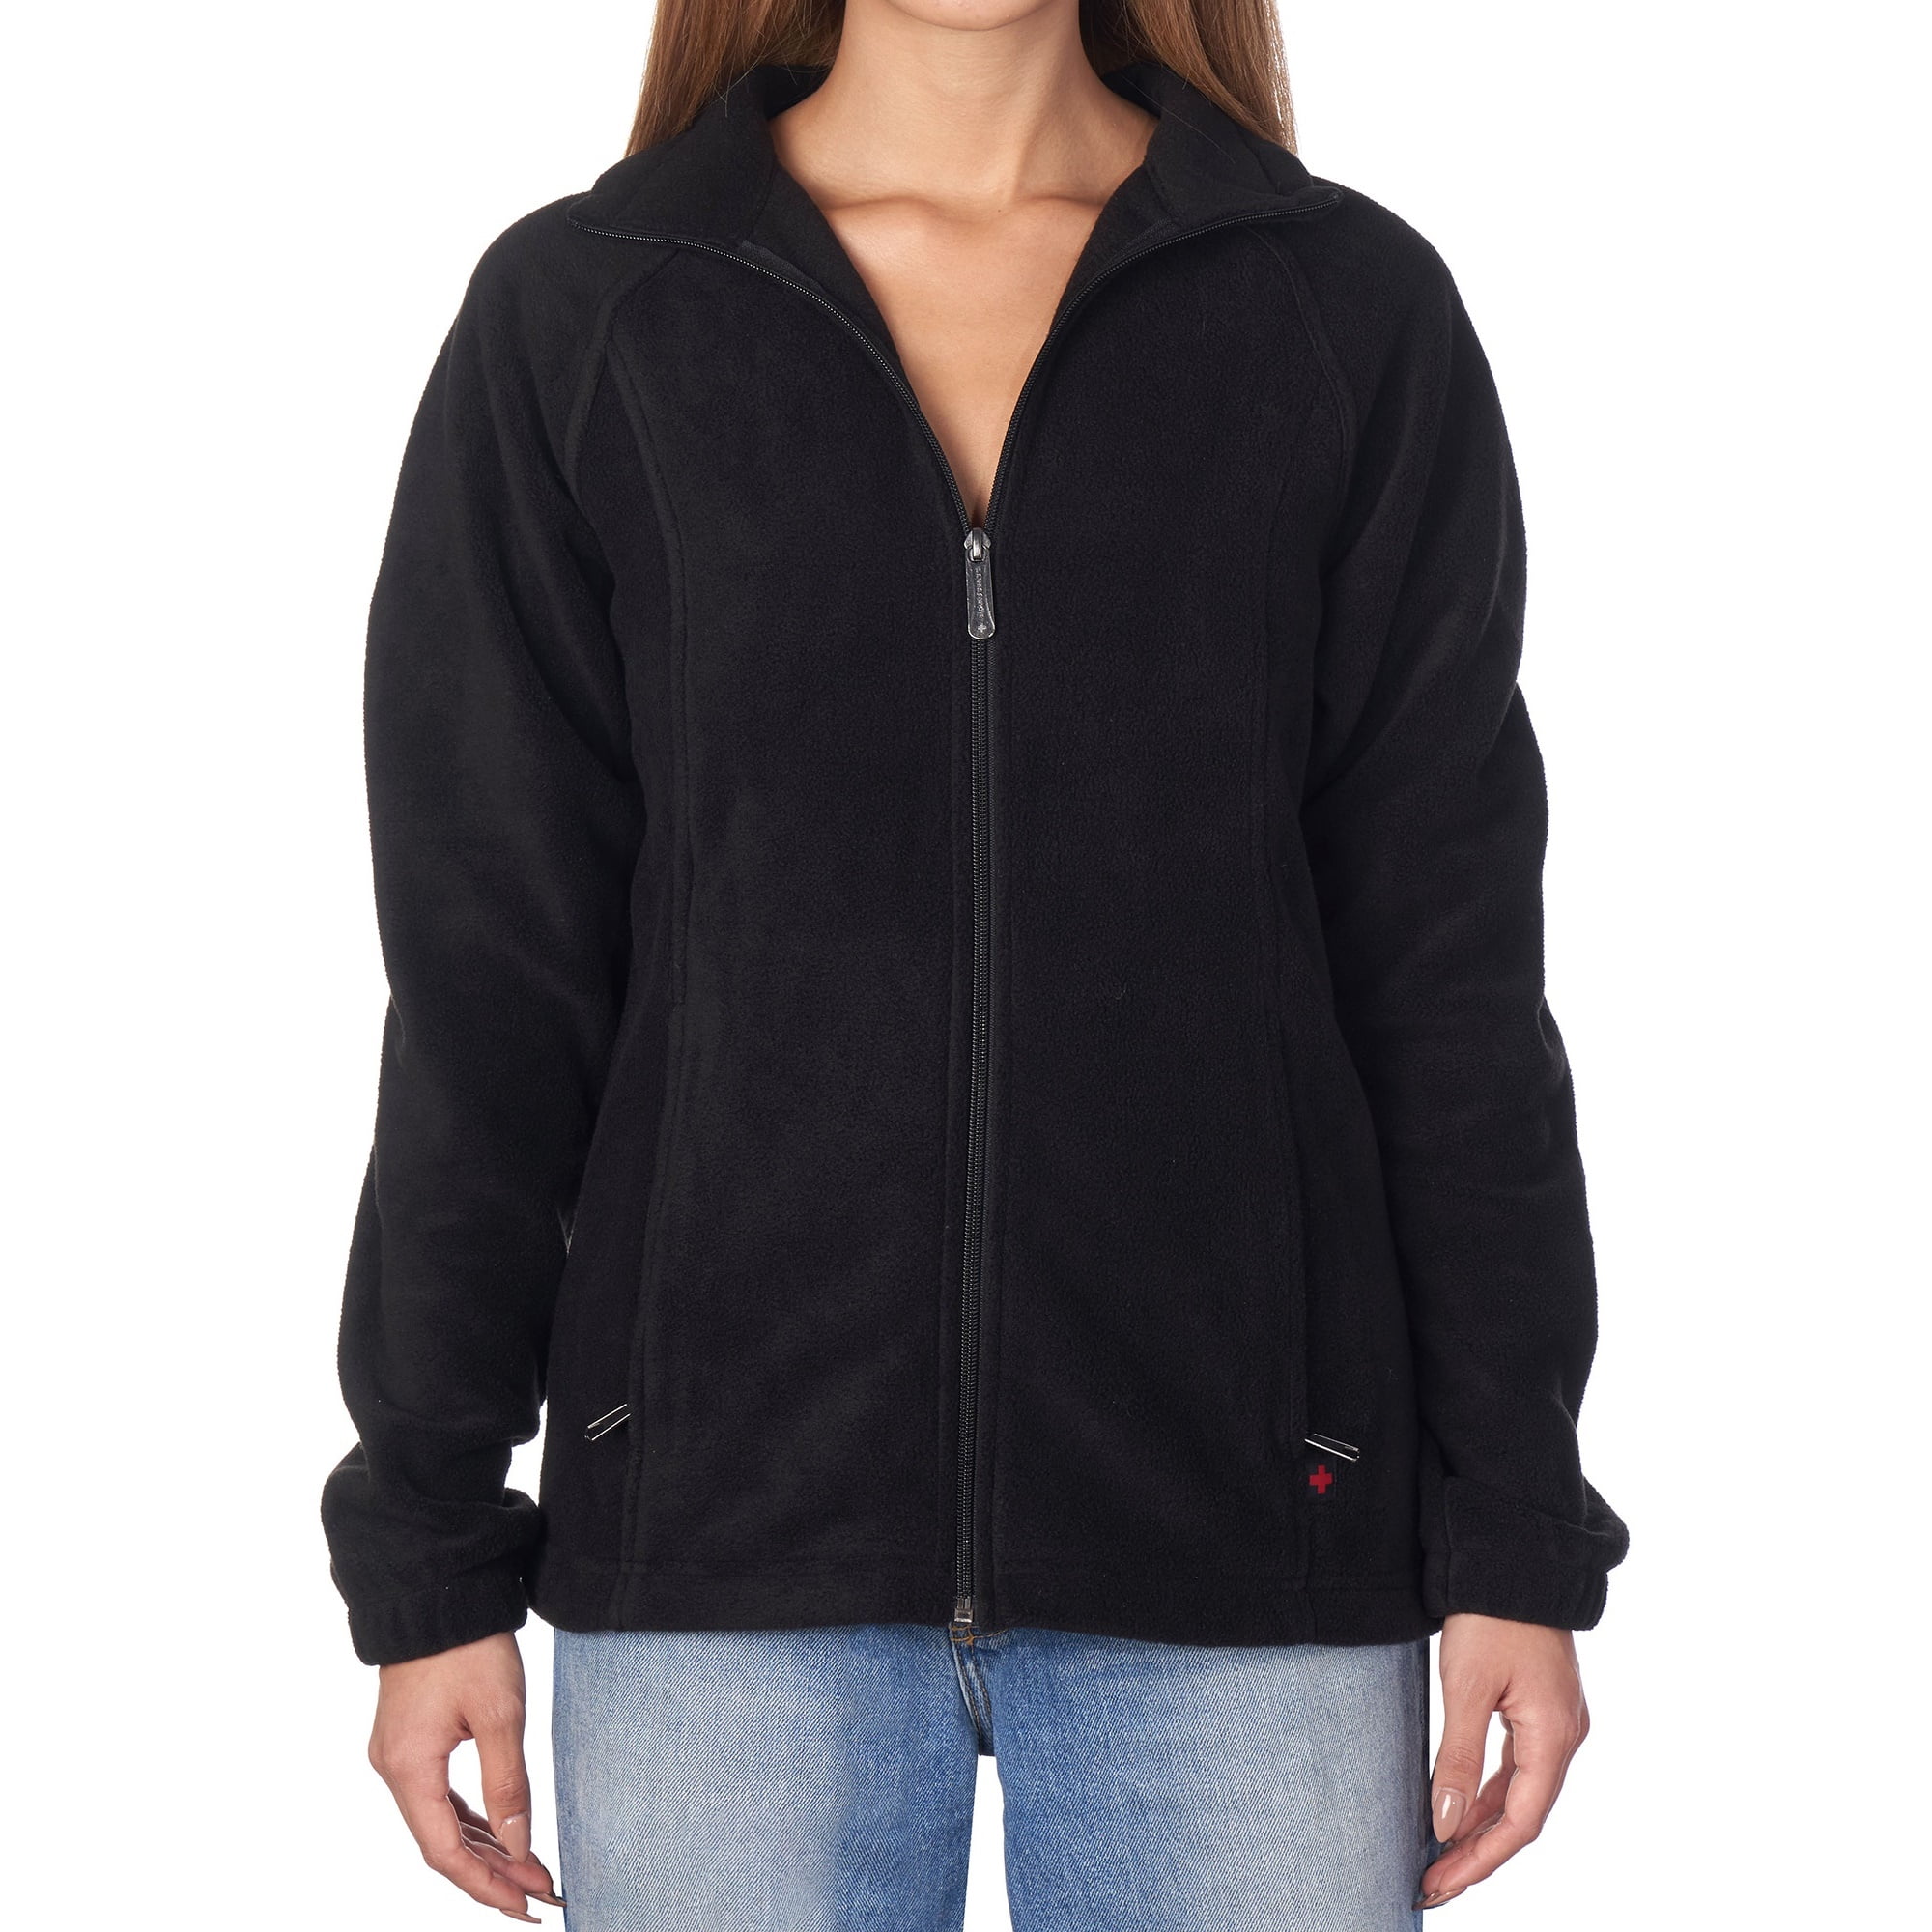 For G and PL Women's Long Sleeve Full Zip Soft Warm Fleece Jacket